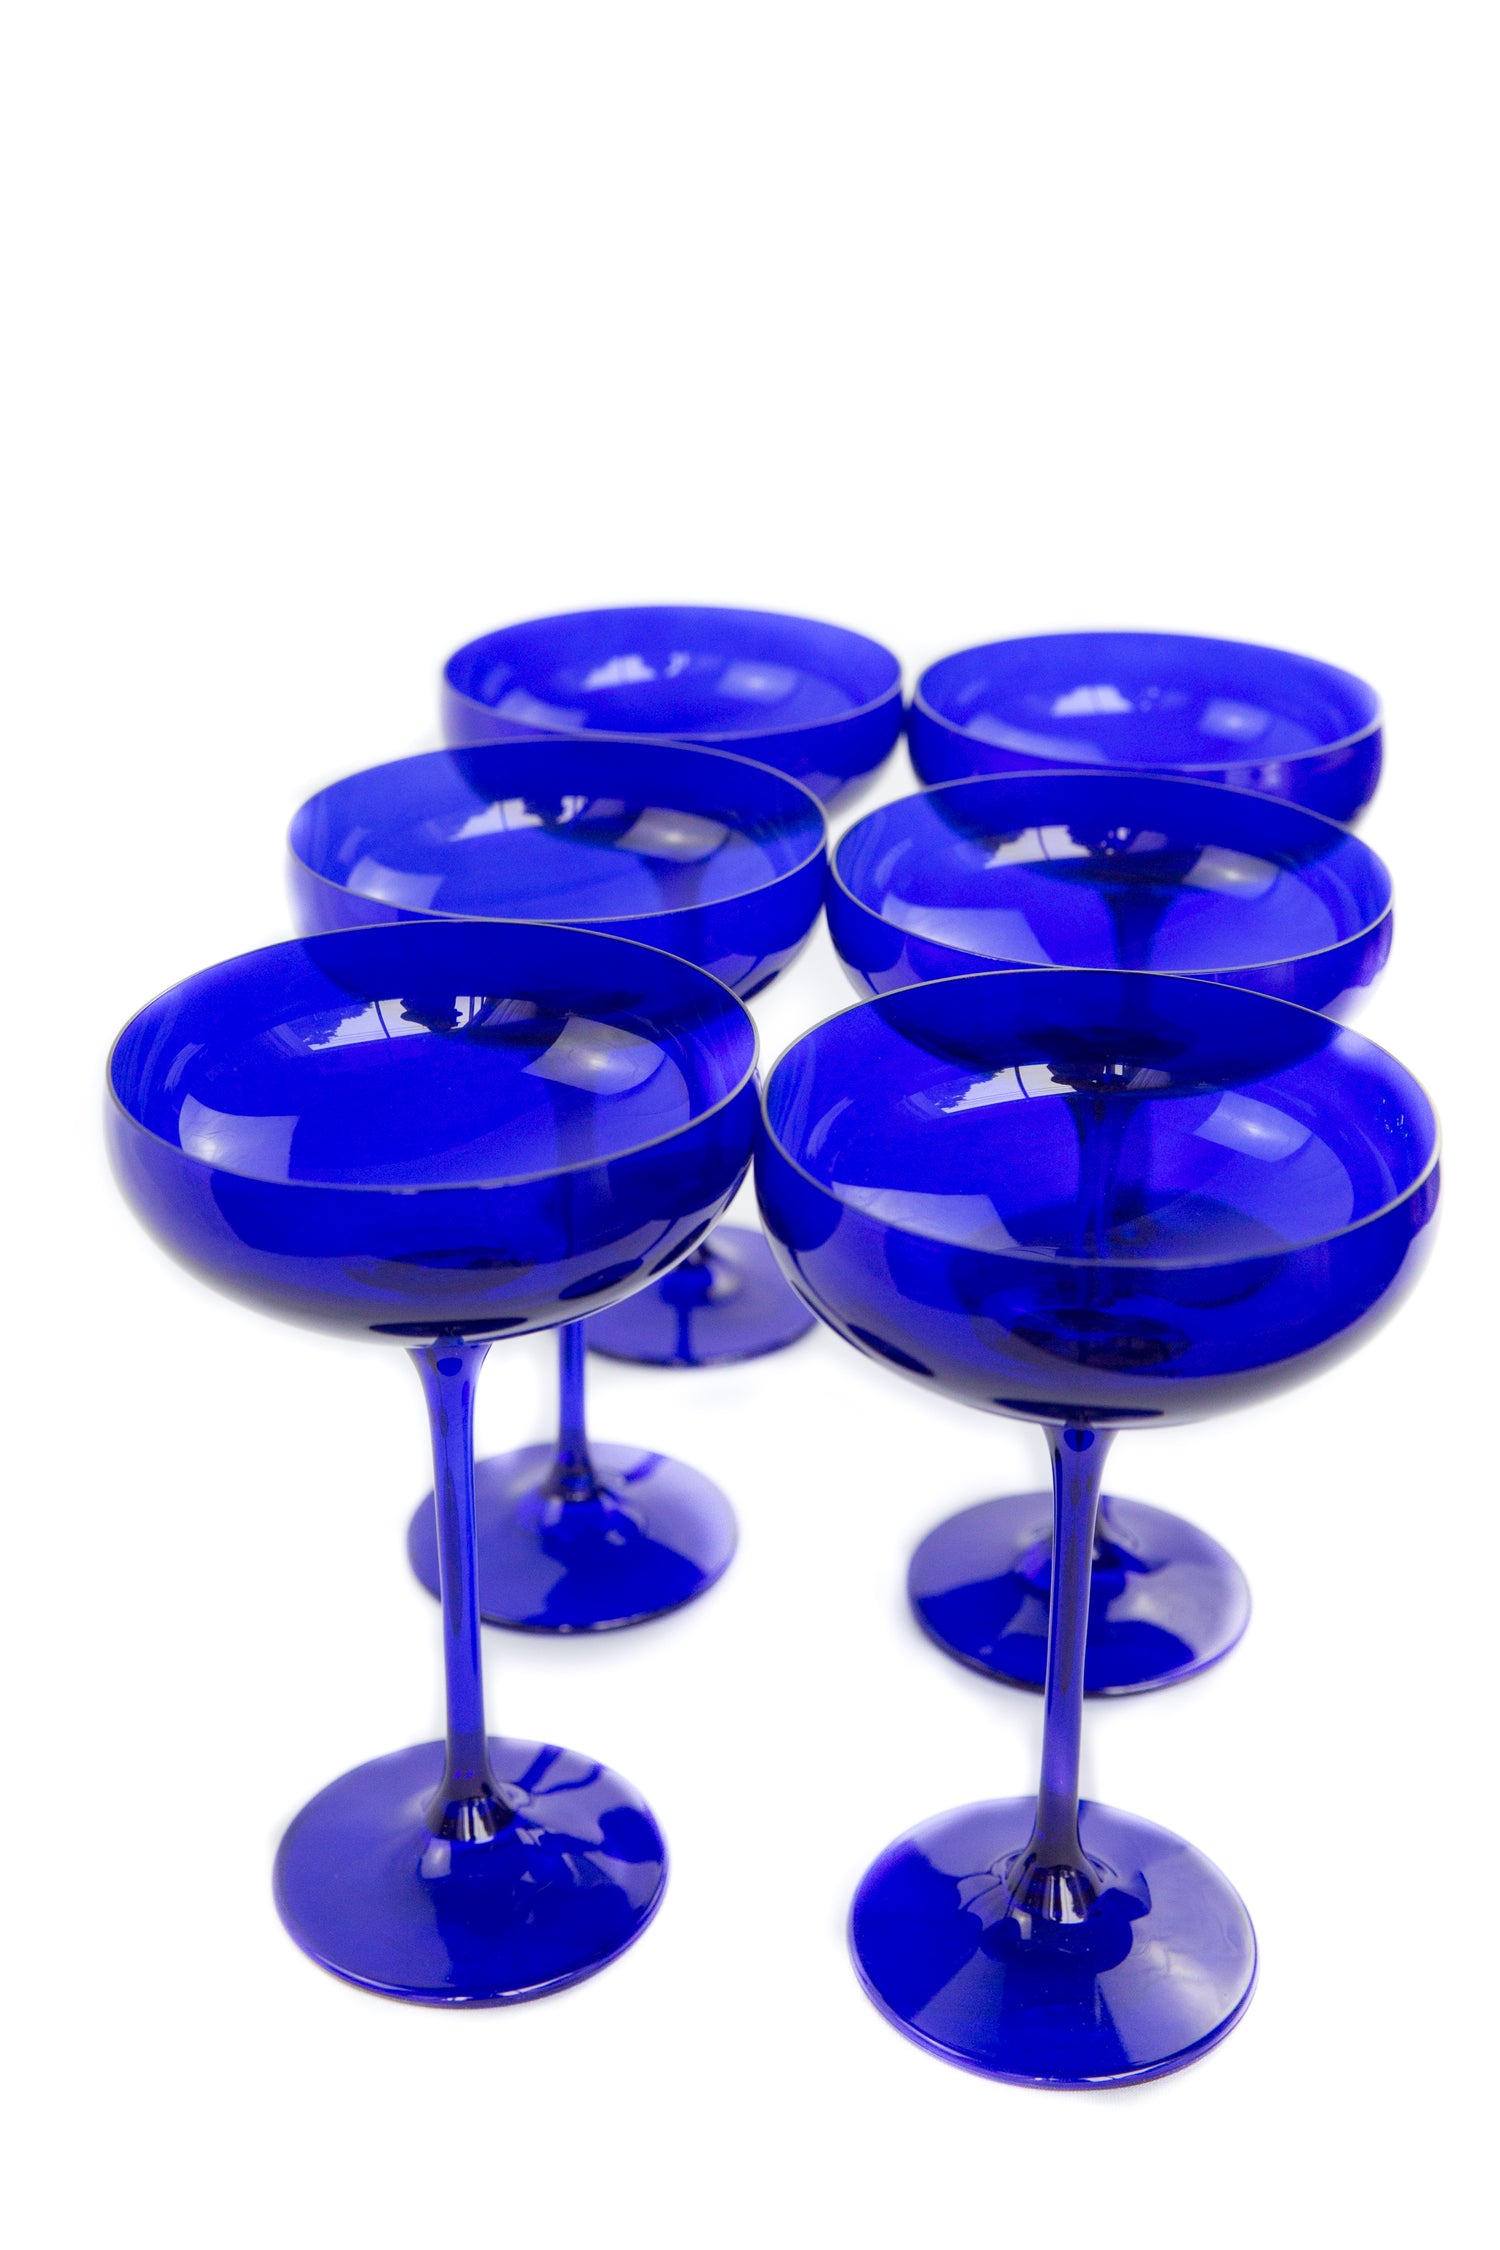 Estelle Colored Champagne Coupe Stemware - Set of 6 {Royal Blue}